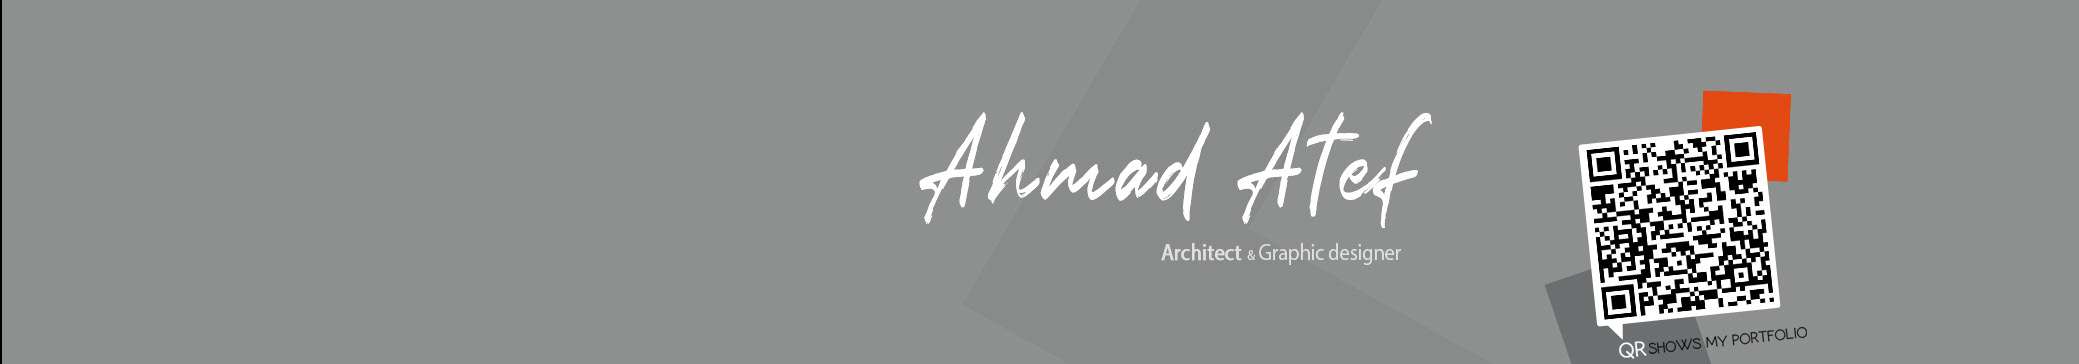 Ahmad Atef's profile banner